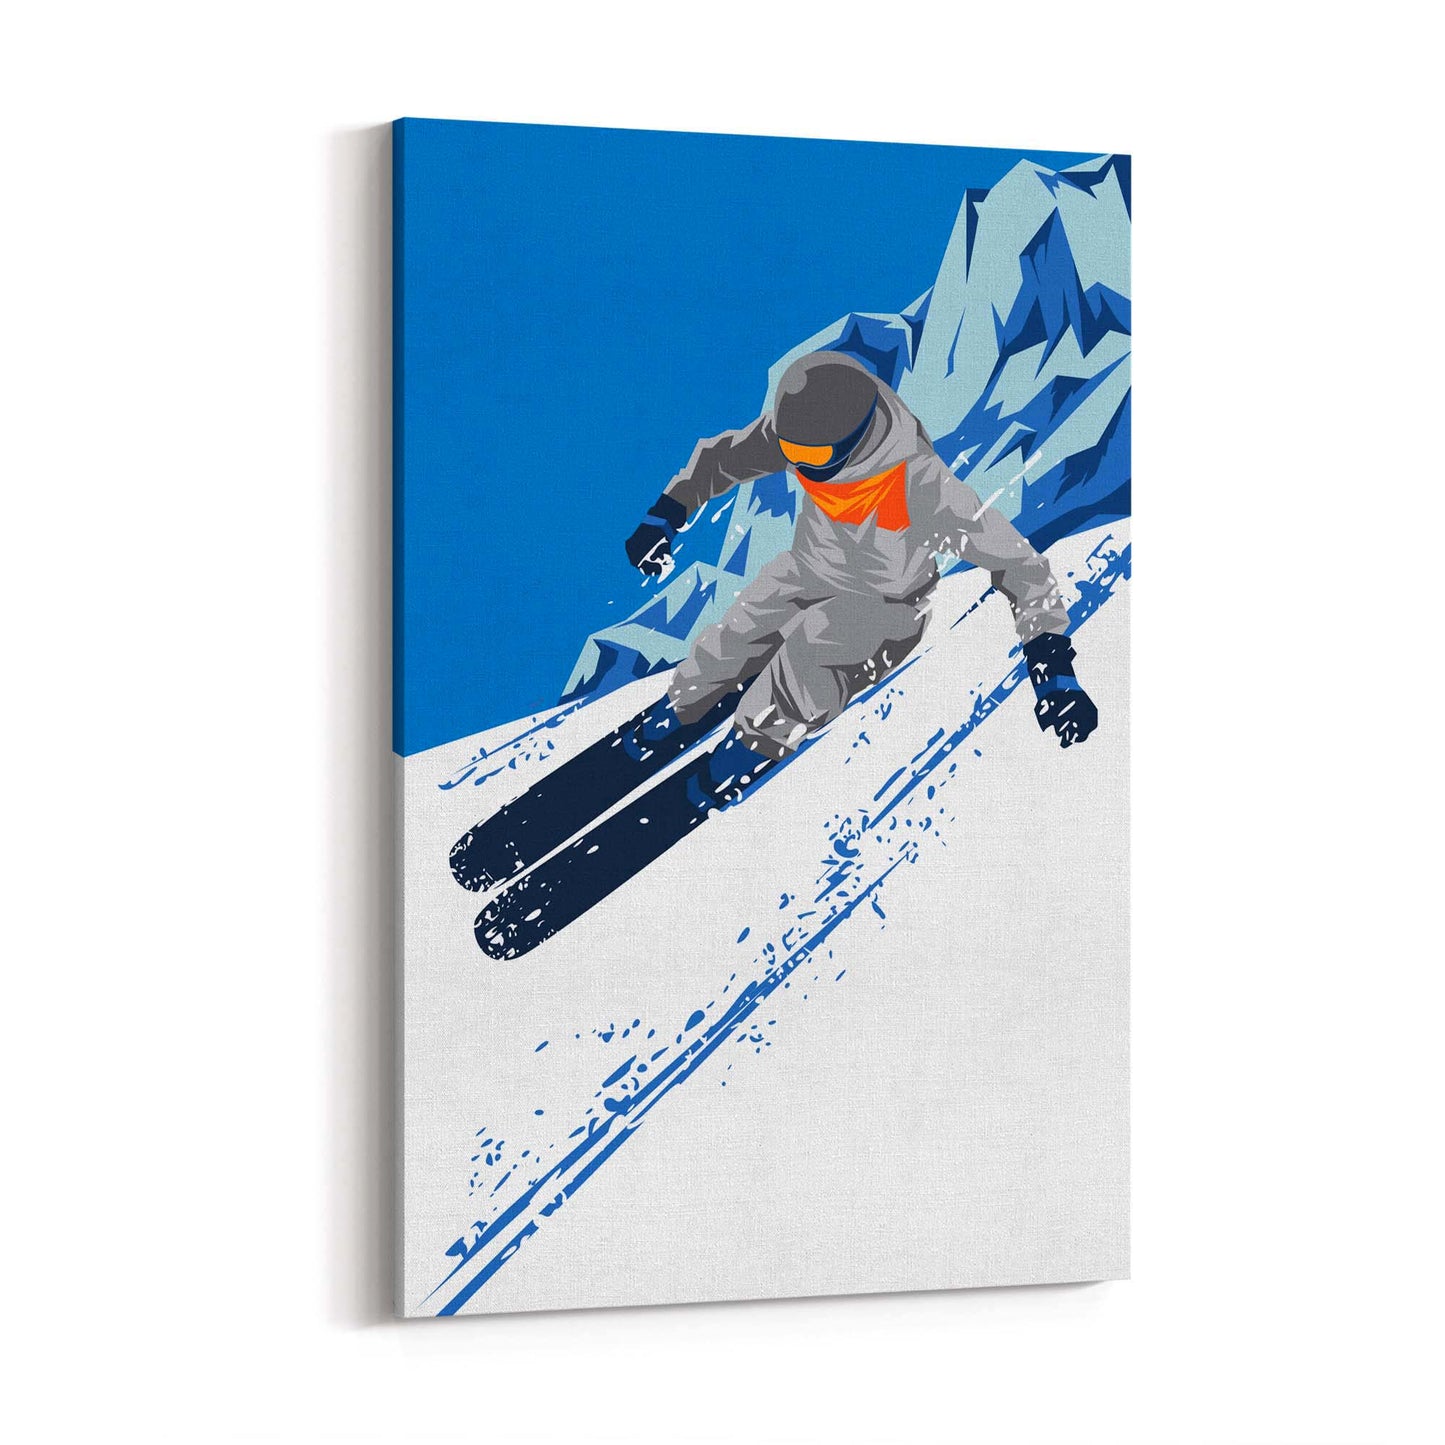 Retro Ski Winter Vintage Snow Cabin Wall Art #1 - The Affordable Art Company